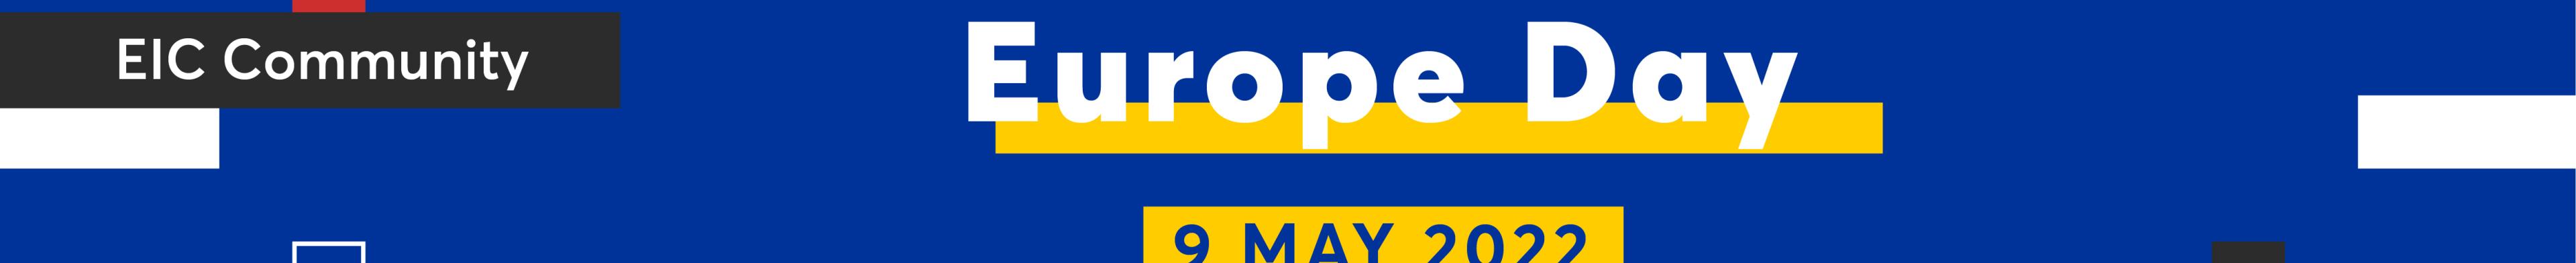 eic_europe_day_community_banner.jpg